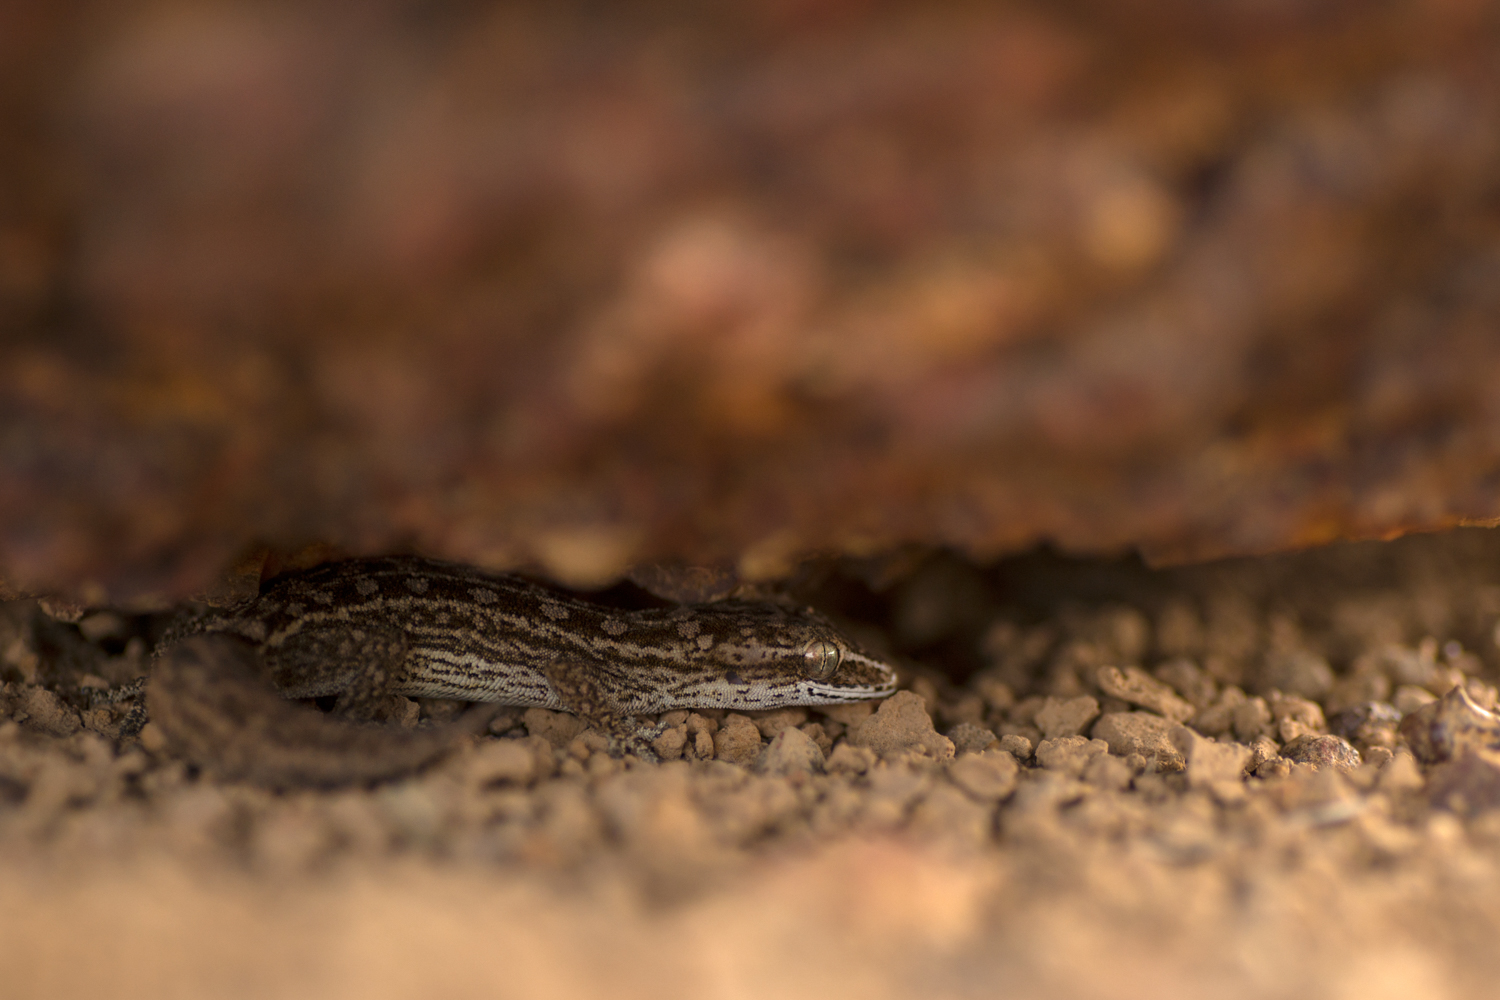  The heat lays the plateau bare, but beneath the rocks reptiles thrive. A&nbsp; Hemidactylus satarensis &nbsp;gecko, waiting under the rocks biding its time till the sun goes down. 